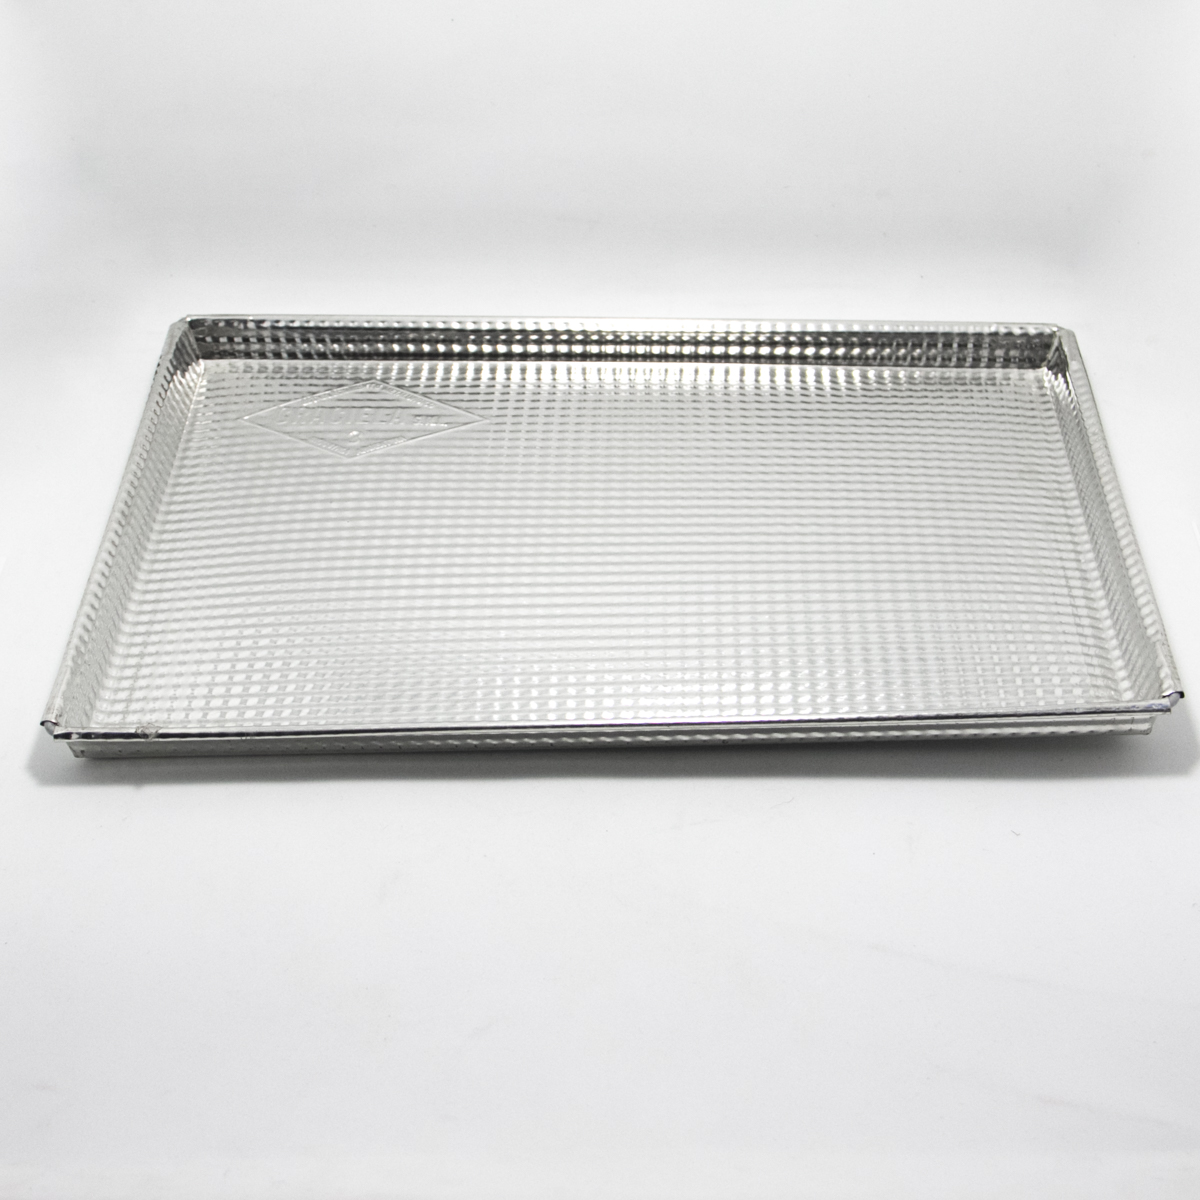 Bandeja Graciela - aluminio - 33,5x23,5cm